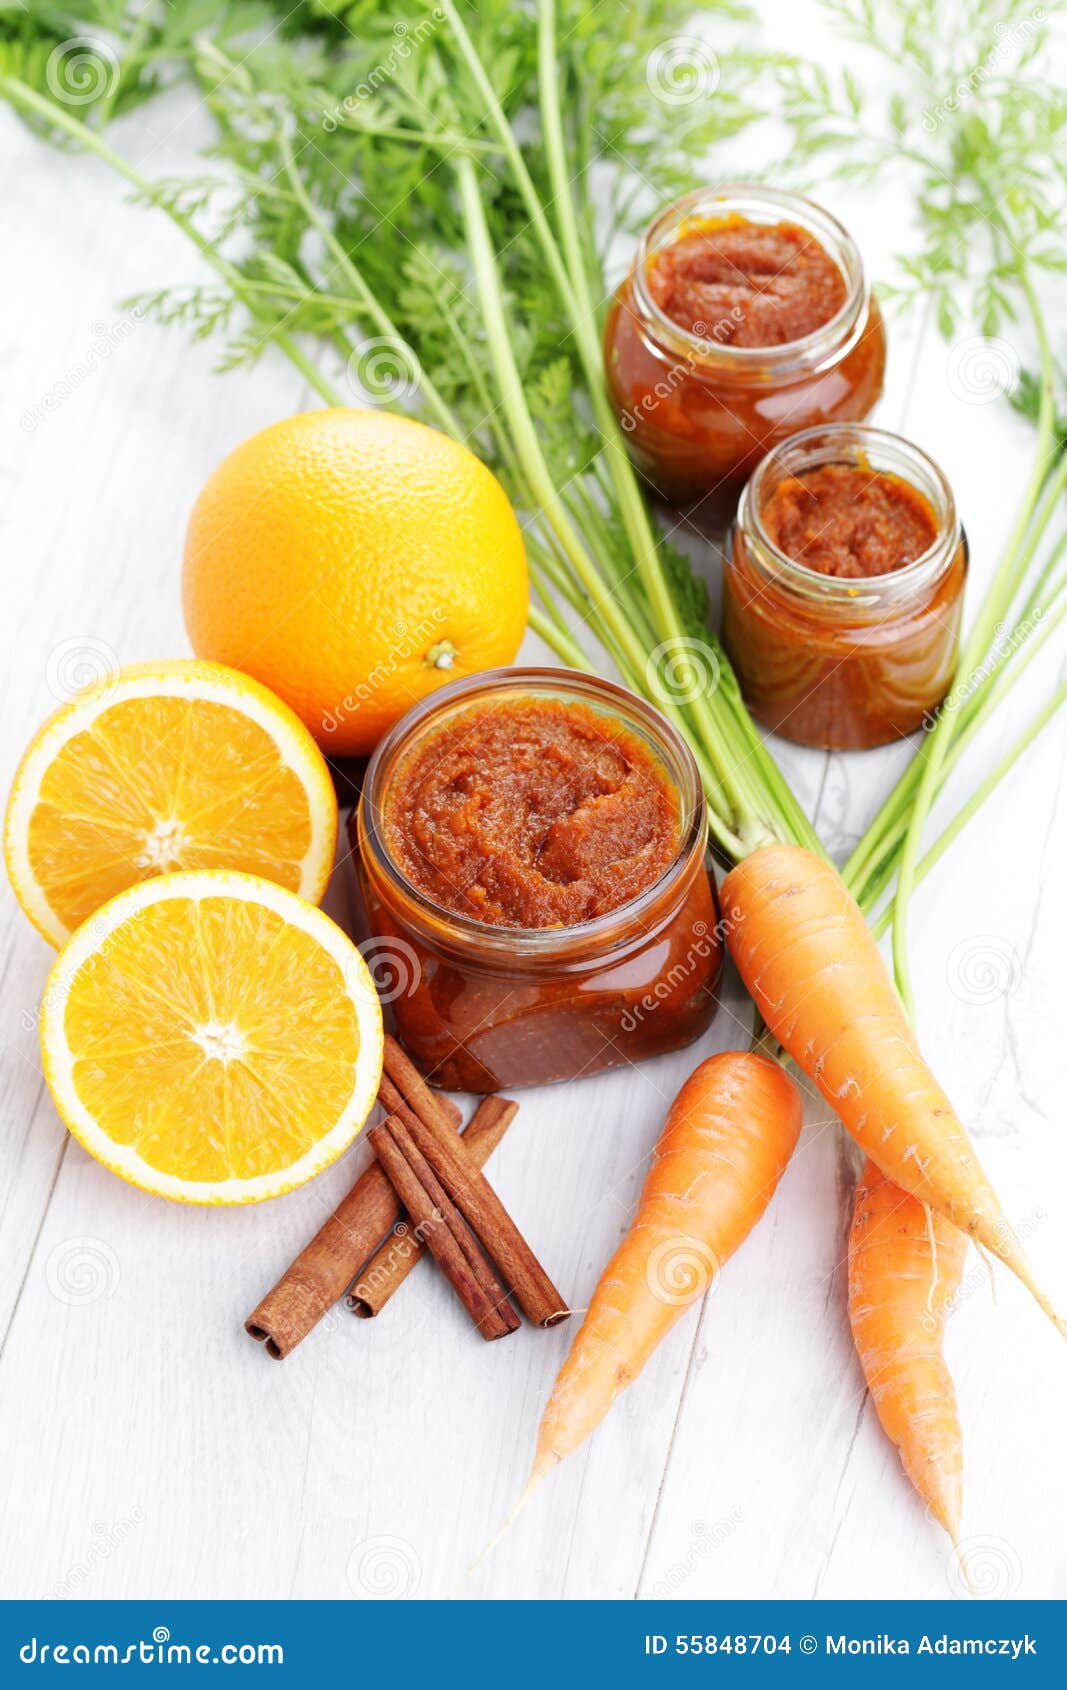 Carrot and orange jam stock photo. Image of dessert, carrot - 55848704